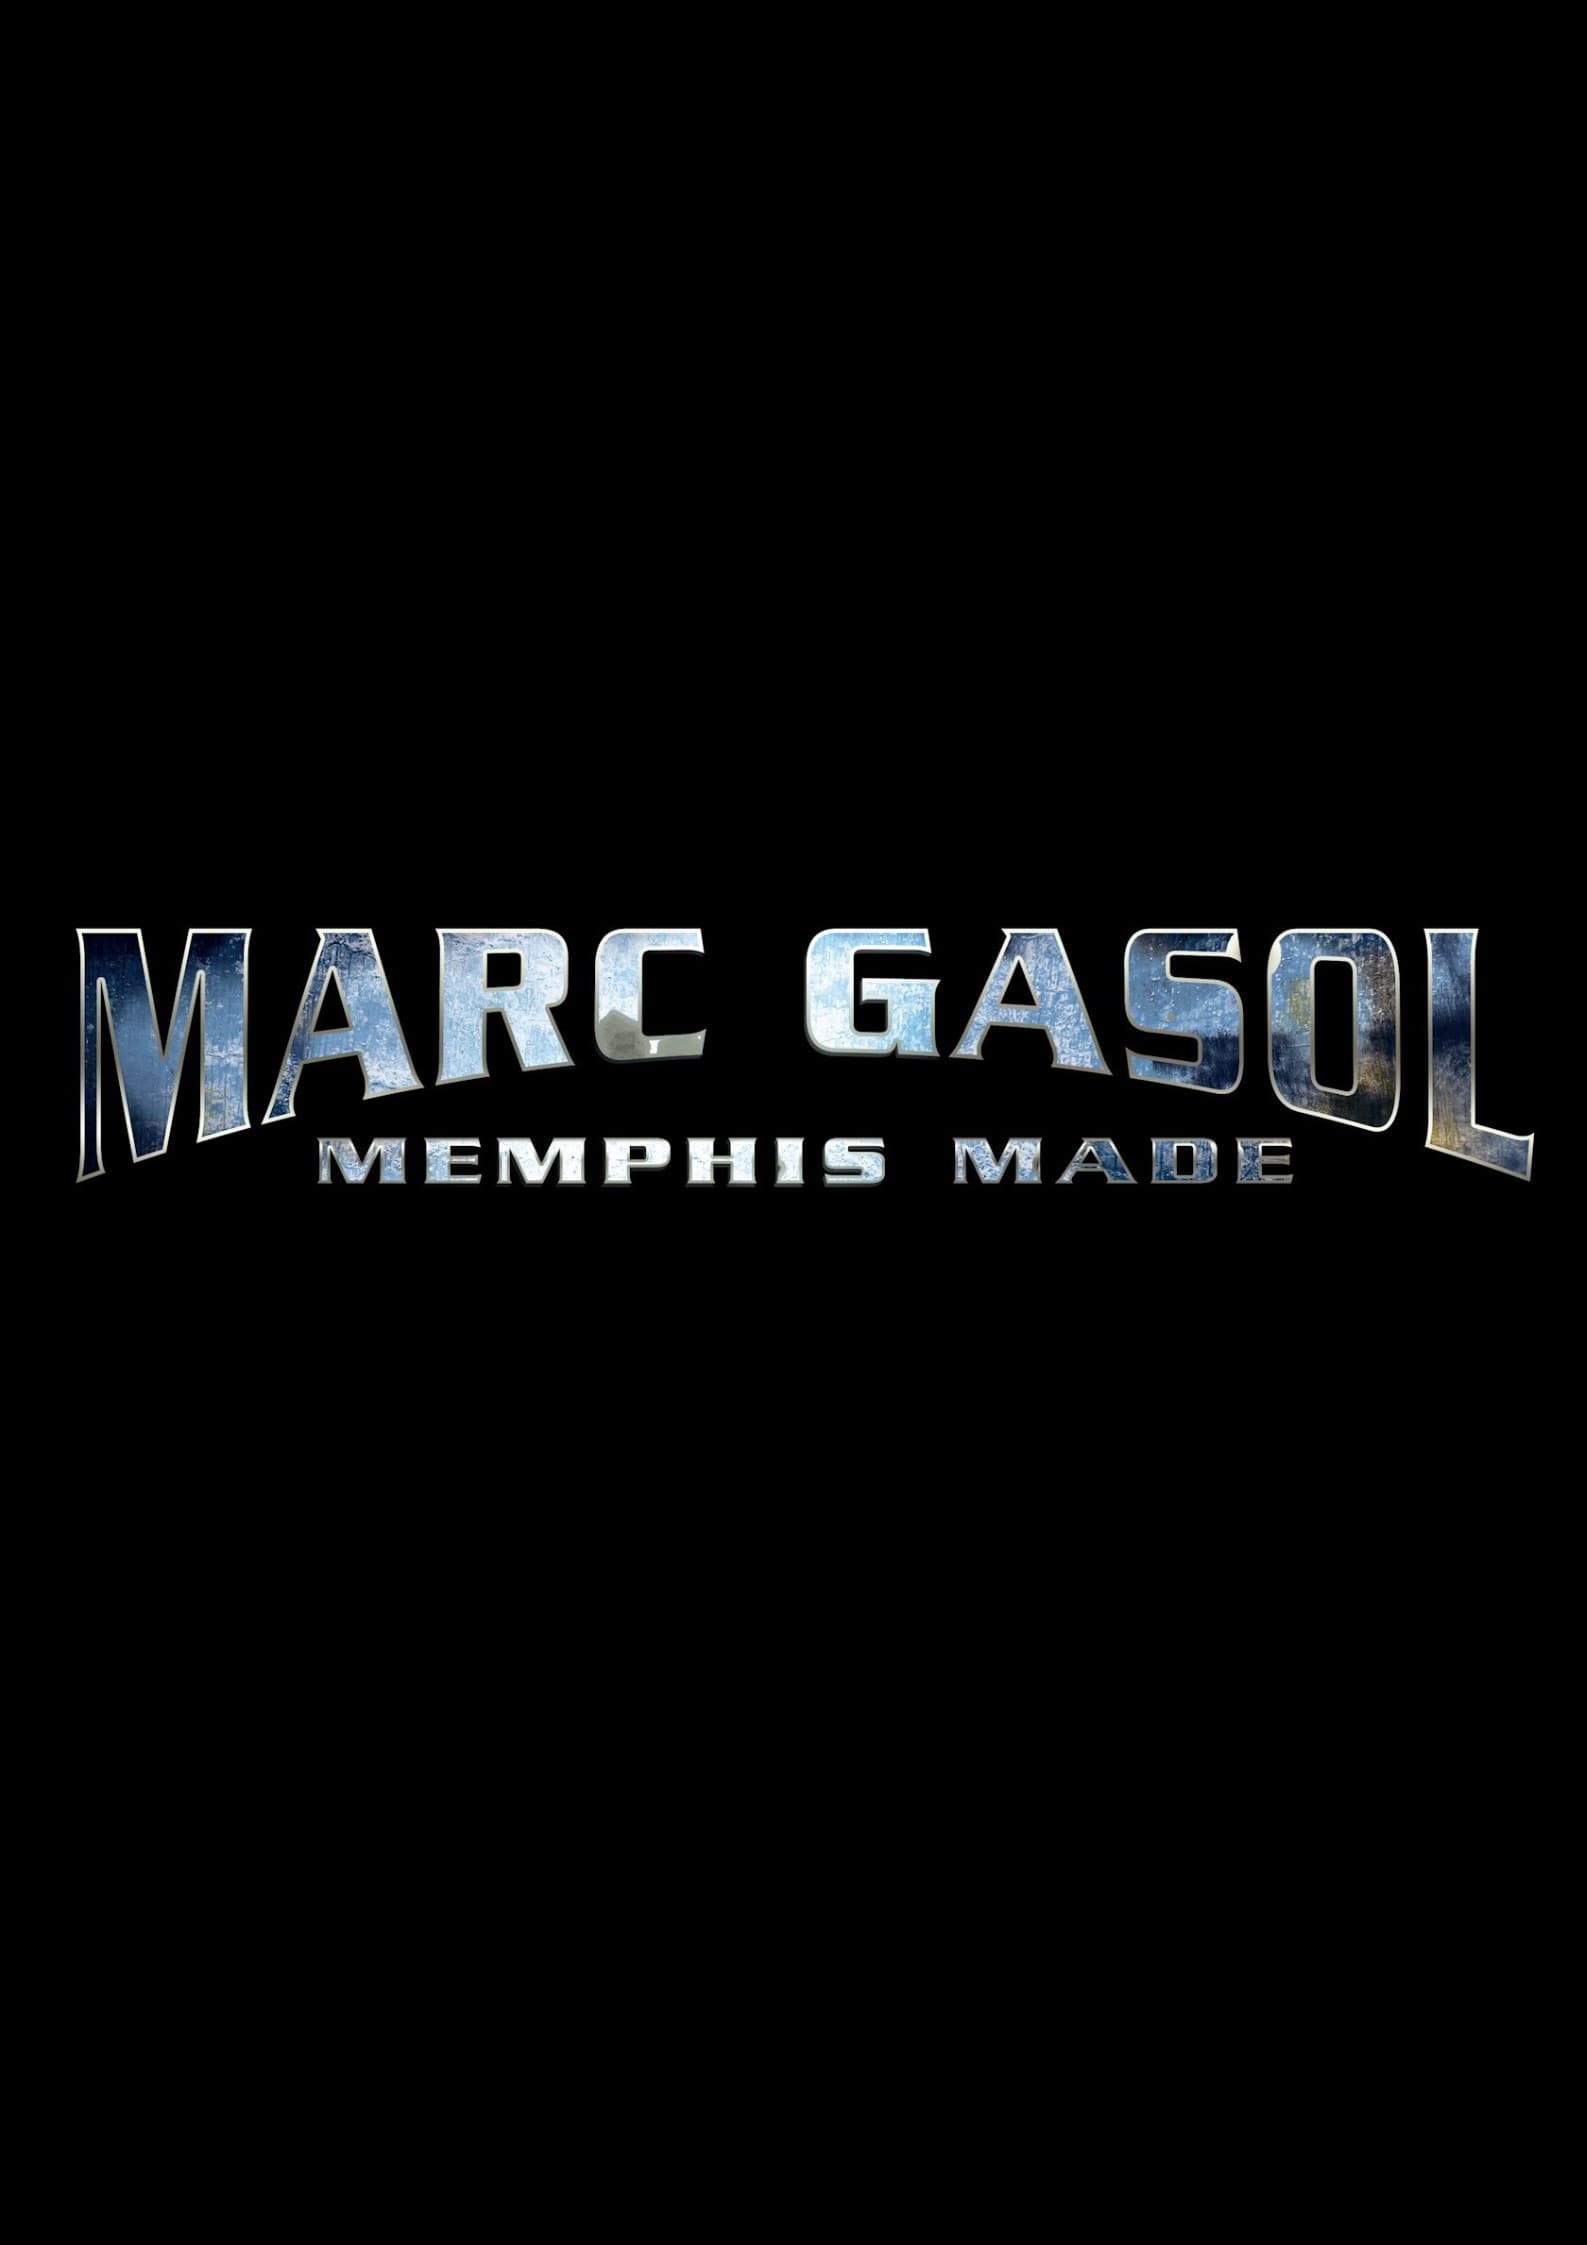 Marc Gasol: Memphis Made